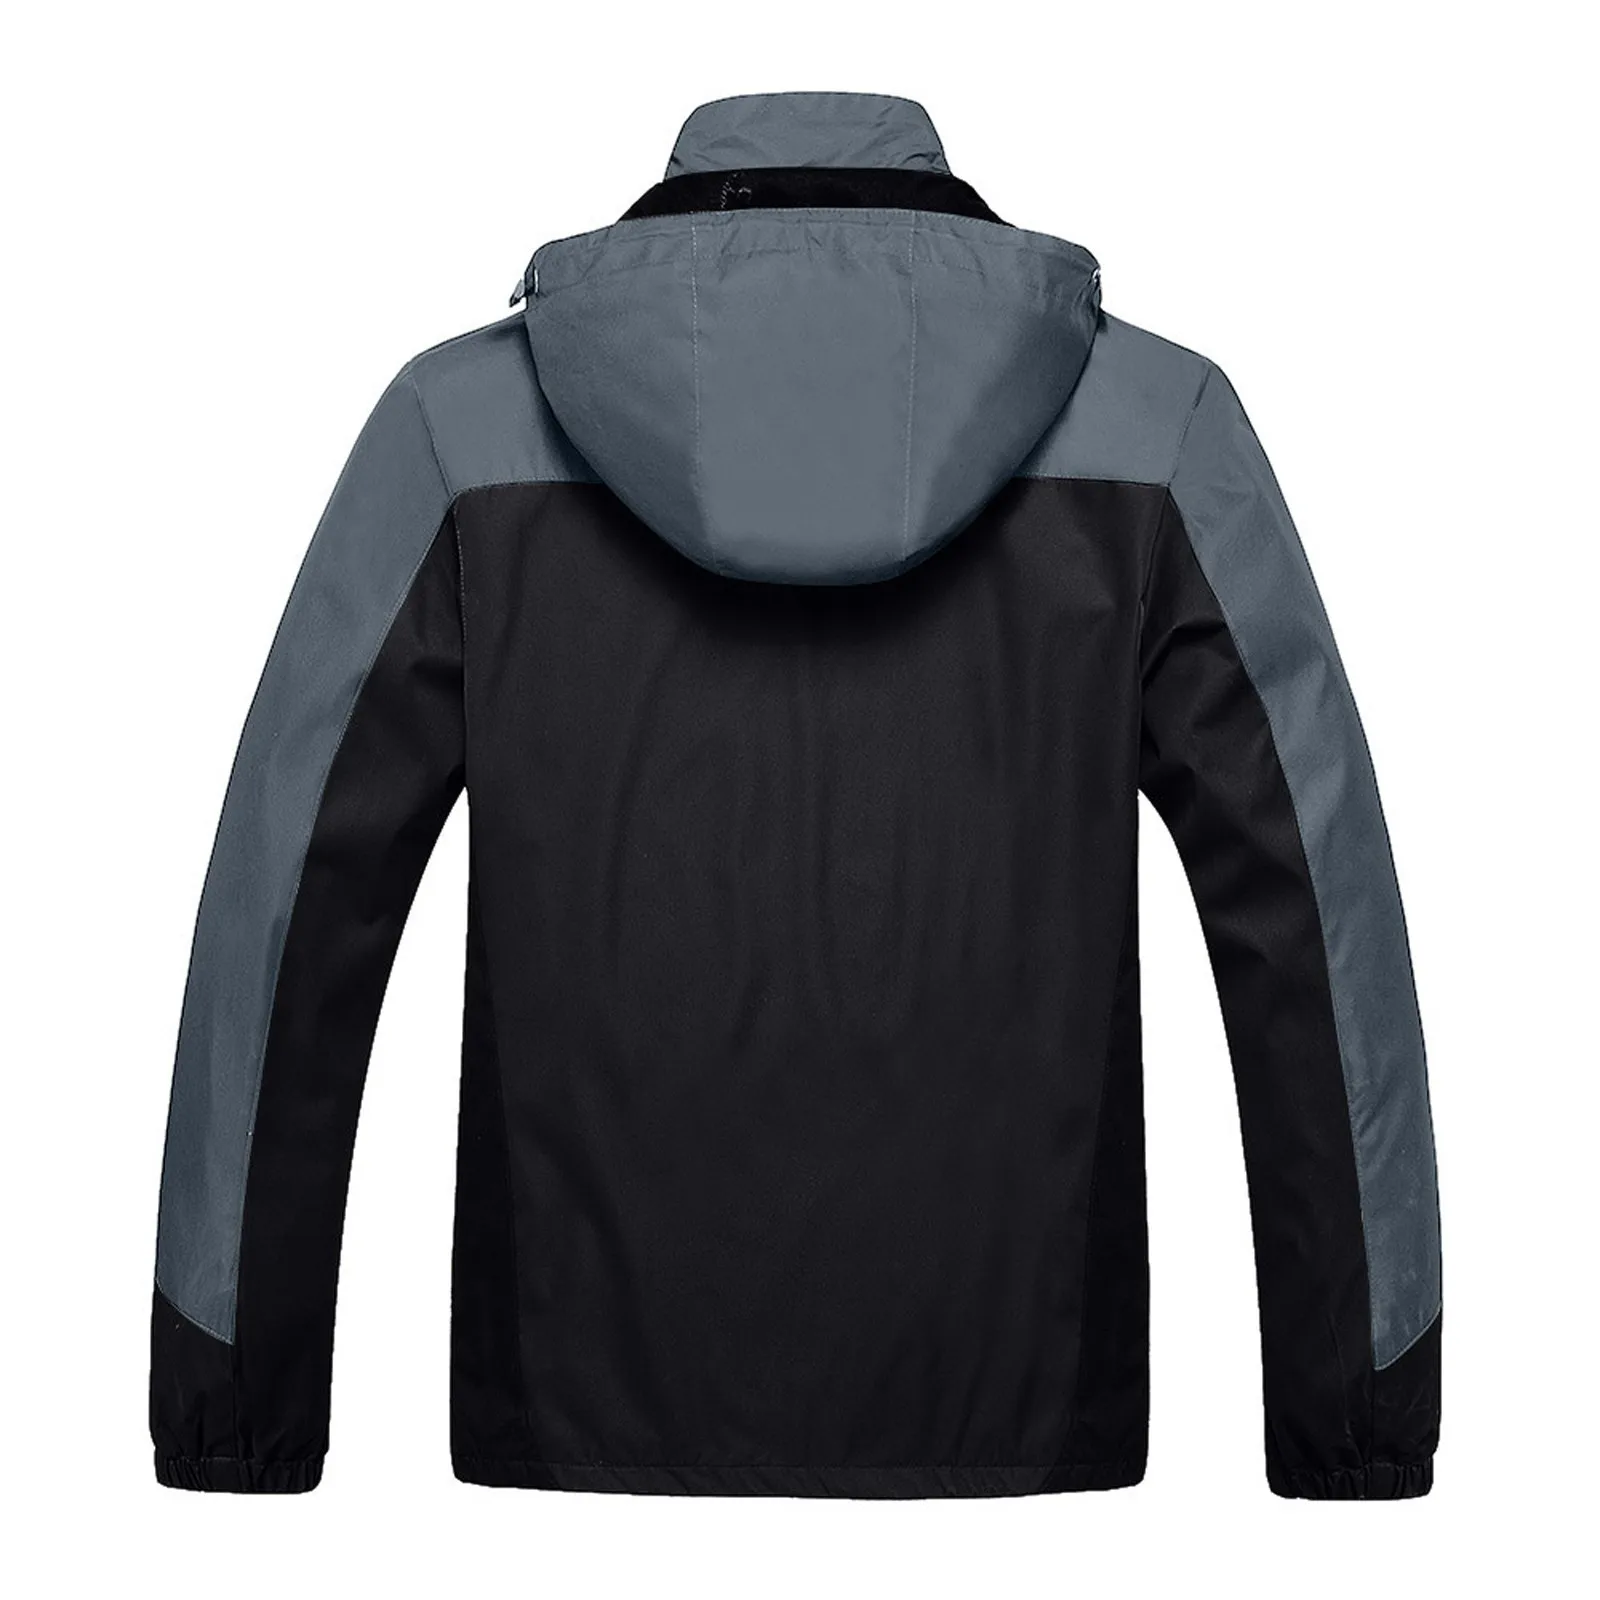 2021Waterproof Windproof Breathable Jacket Men's Jacket Fall Single-layer Thin Windproof And Waterproof Jacket Jaqueta Masculina